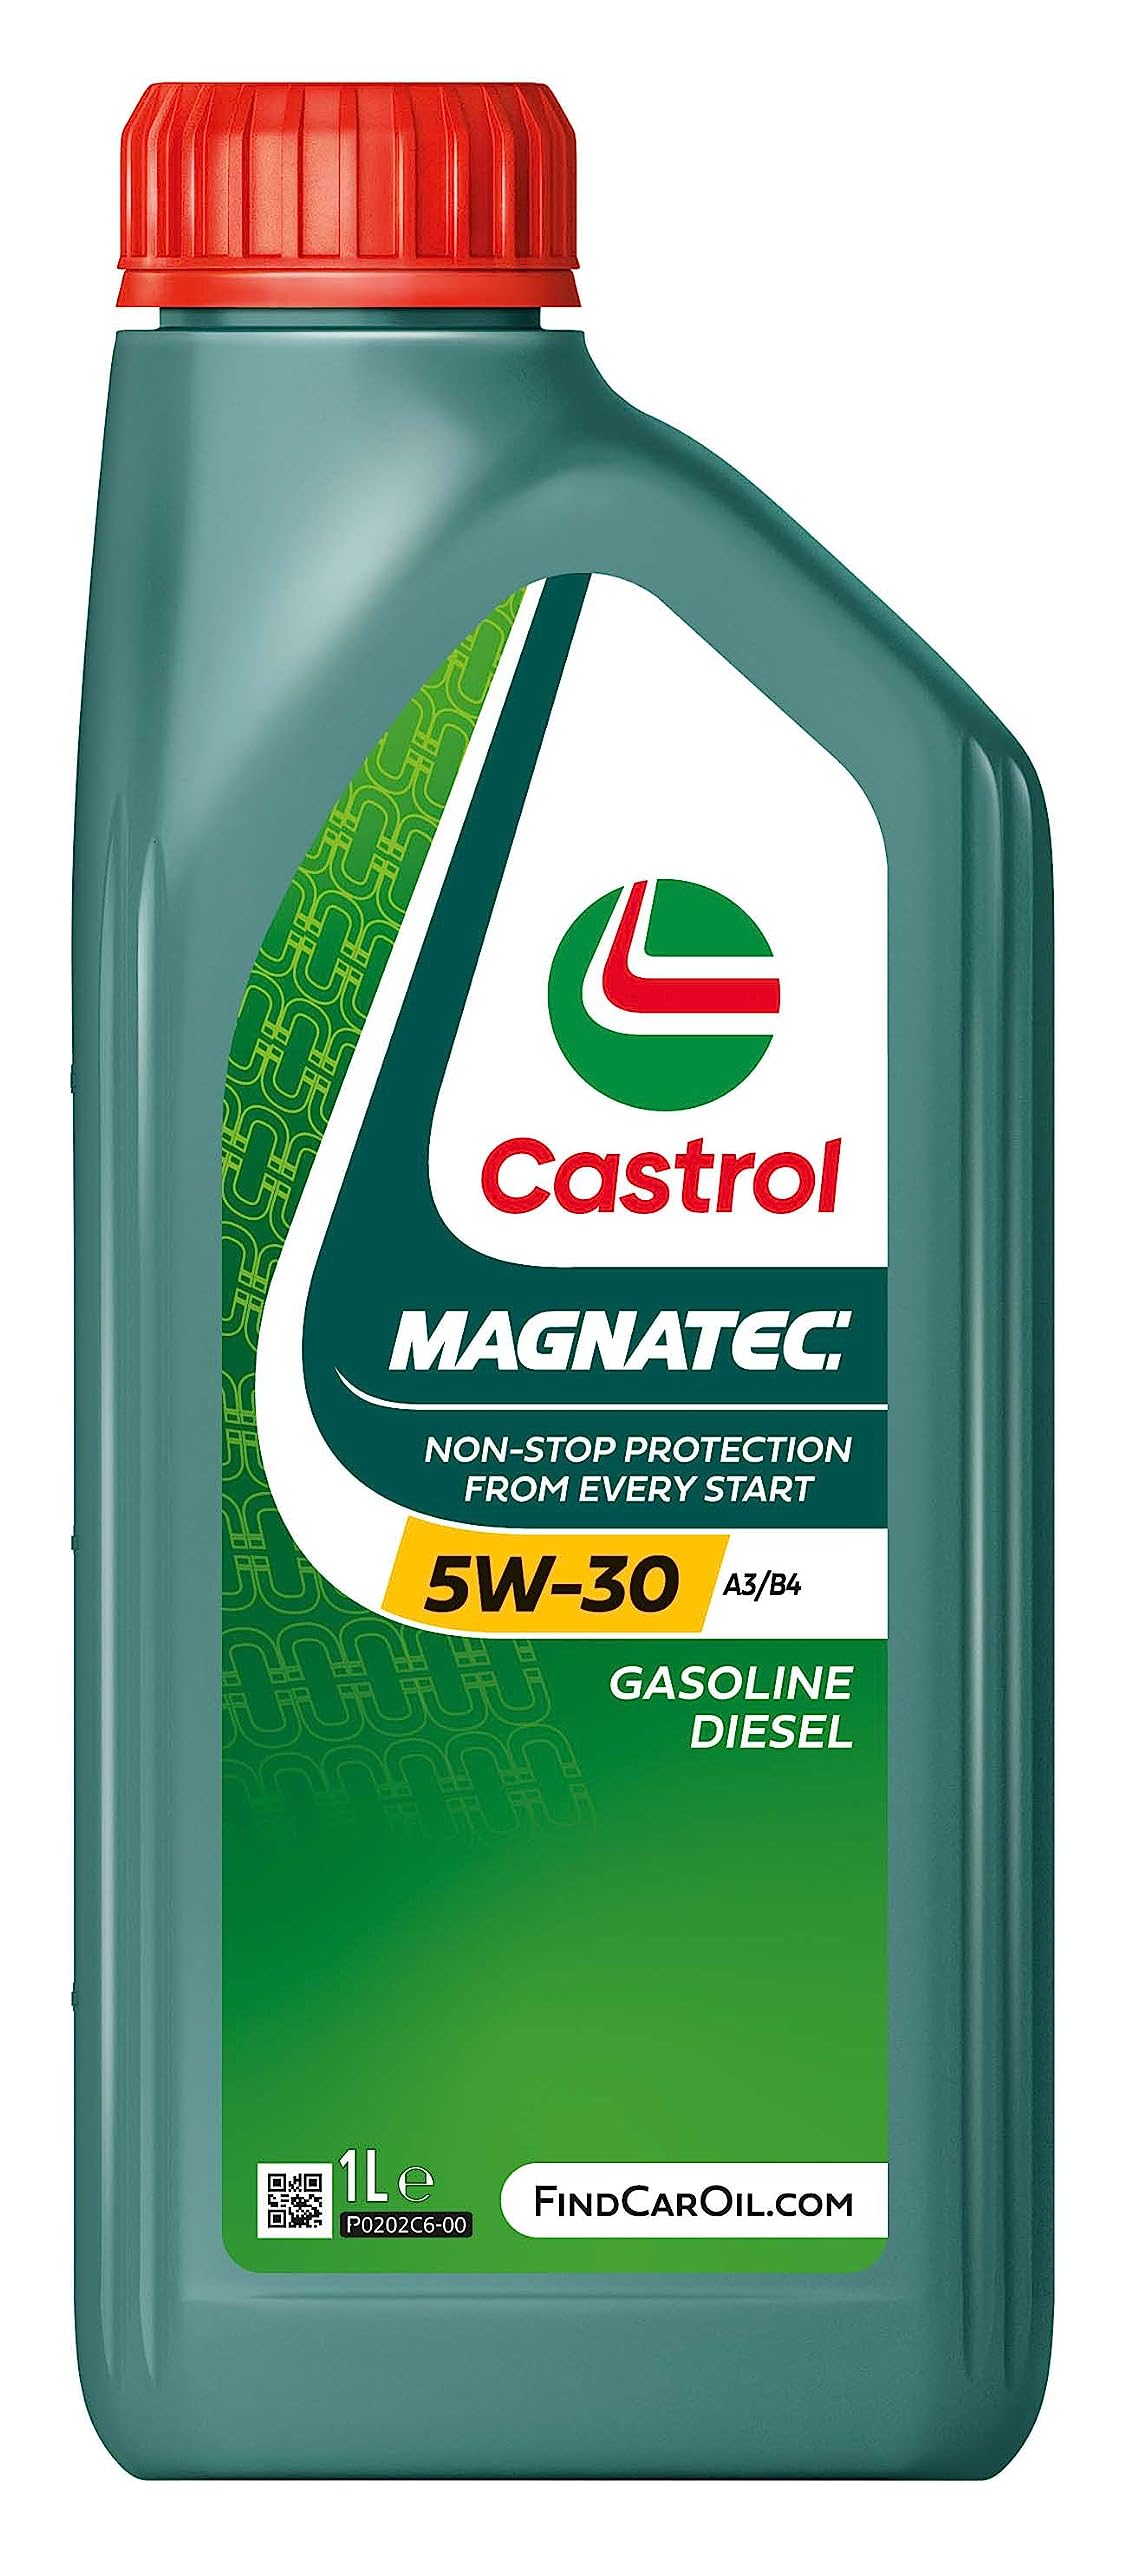 Castrol MAGNATEC 5W-30 A3/B4 Motoröl, 1L von Castrol